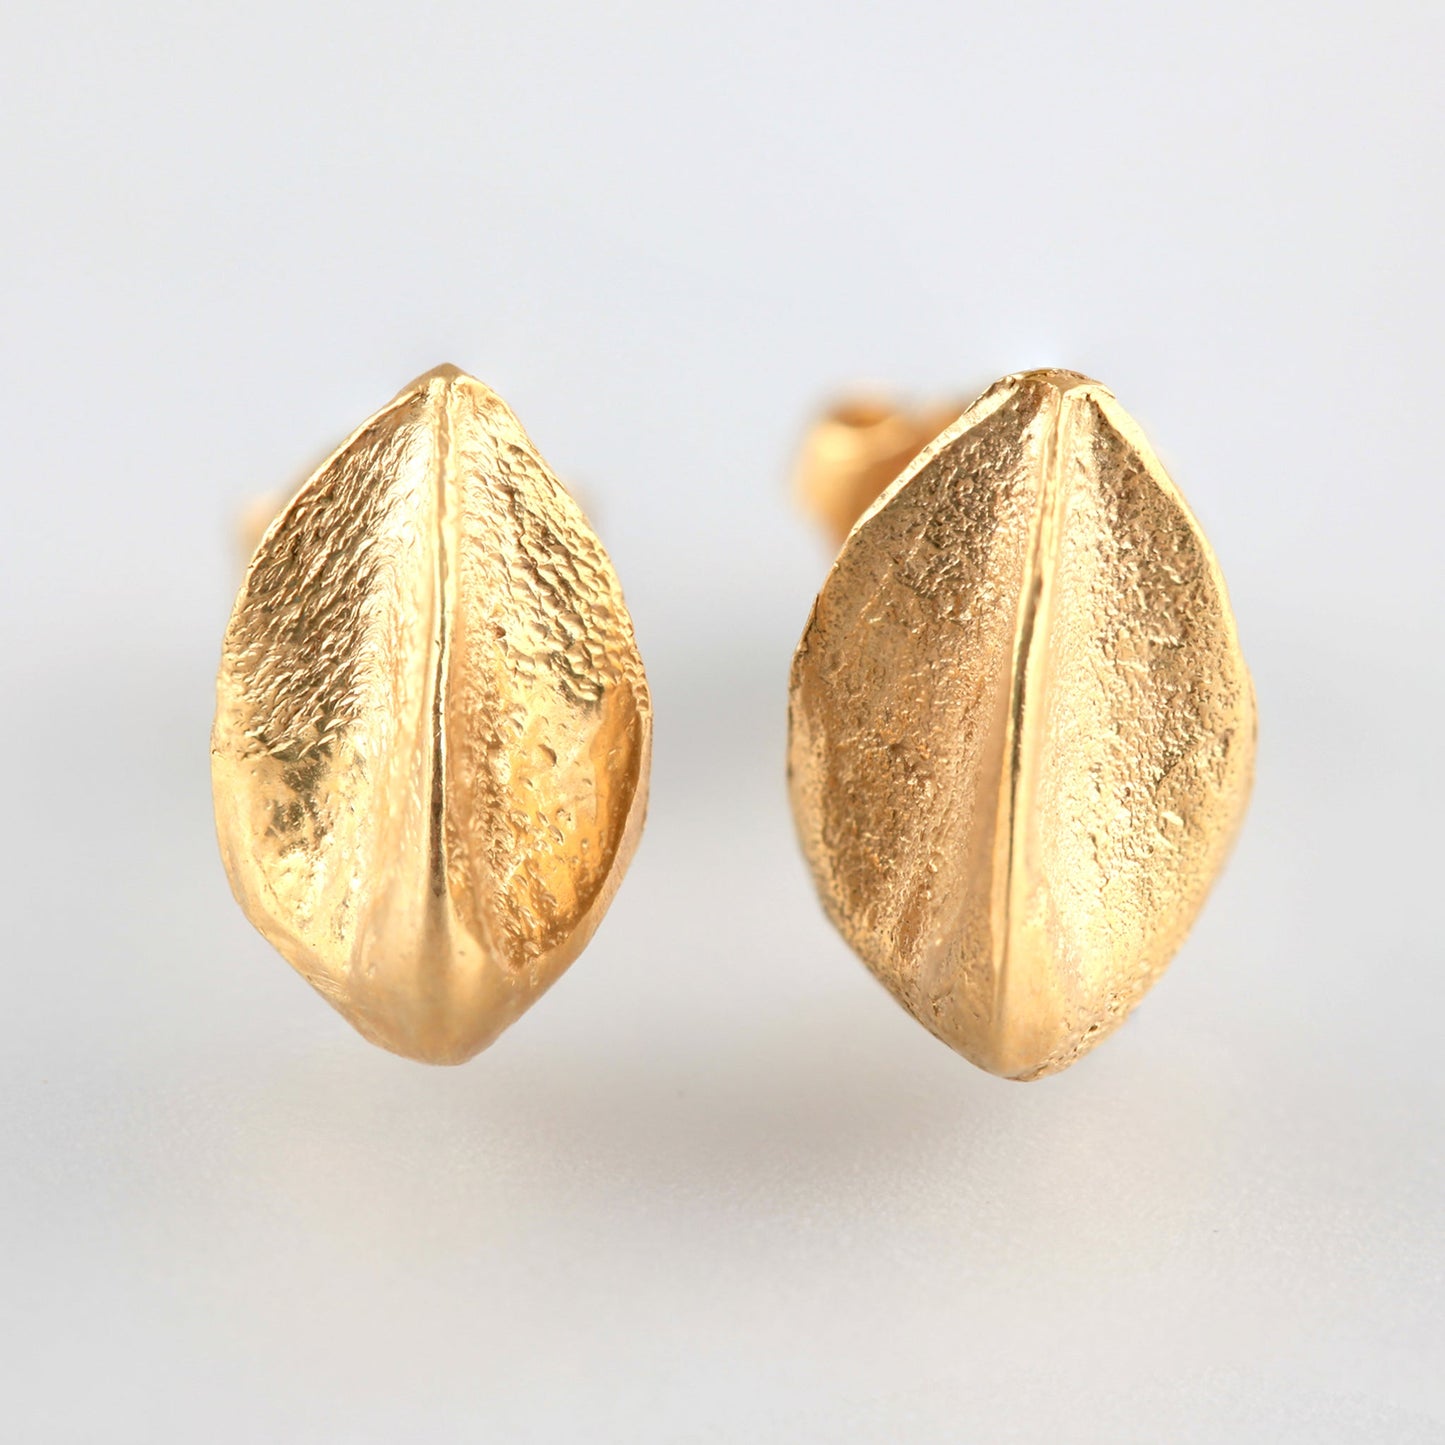 Beech Mast Gold Earrings - Studs - Kathleen Holland Jewellery